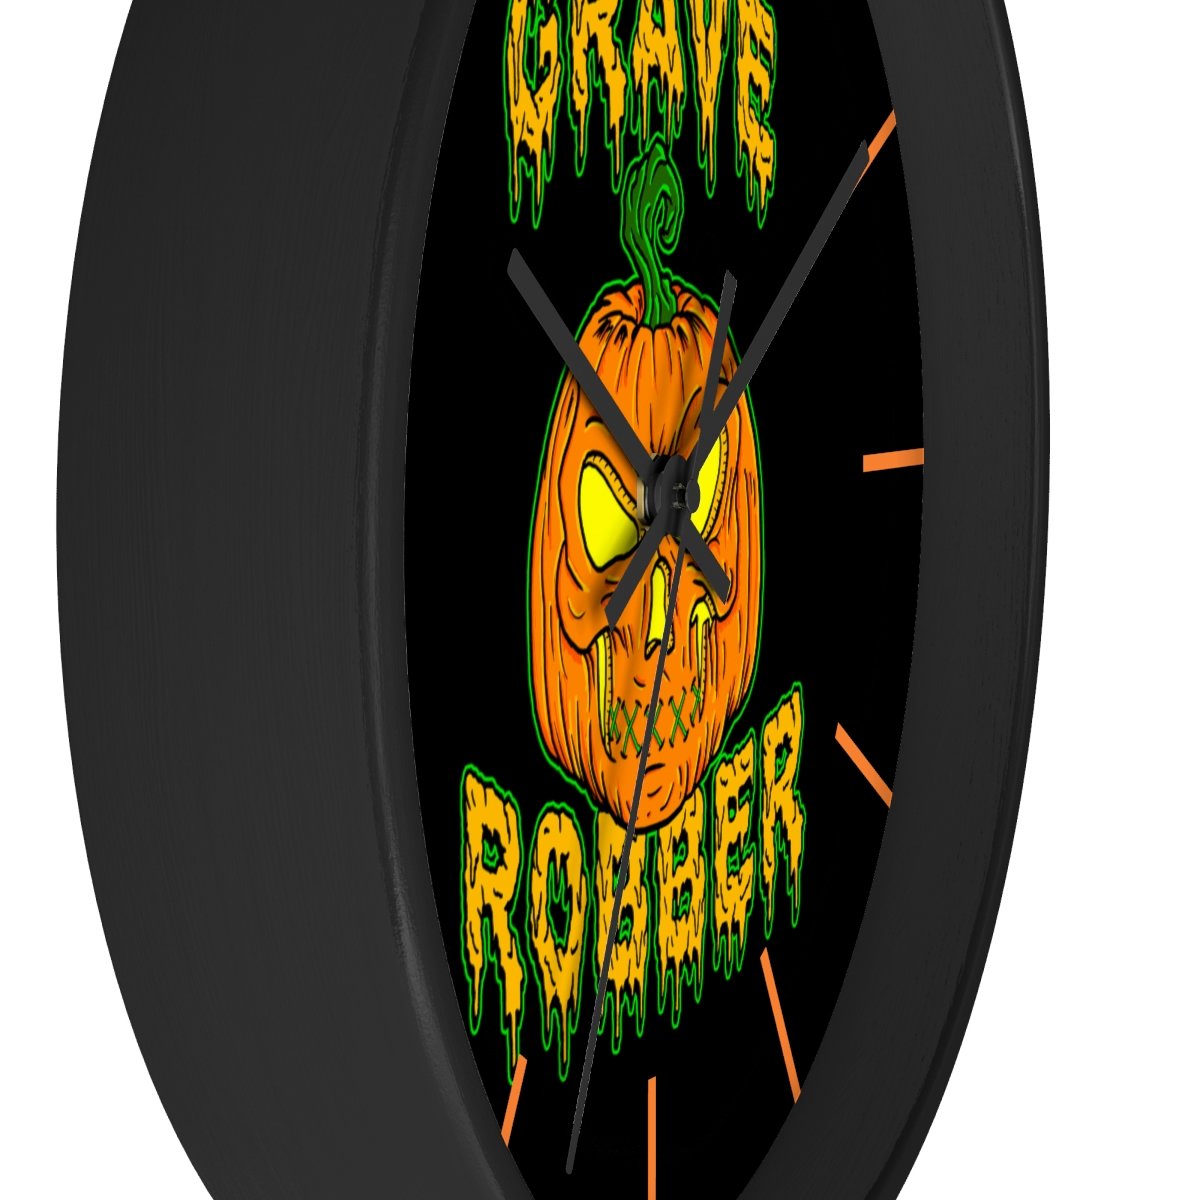 Grave Robber Pumpkin 2021 Version Wall clock